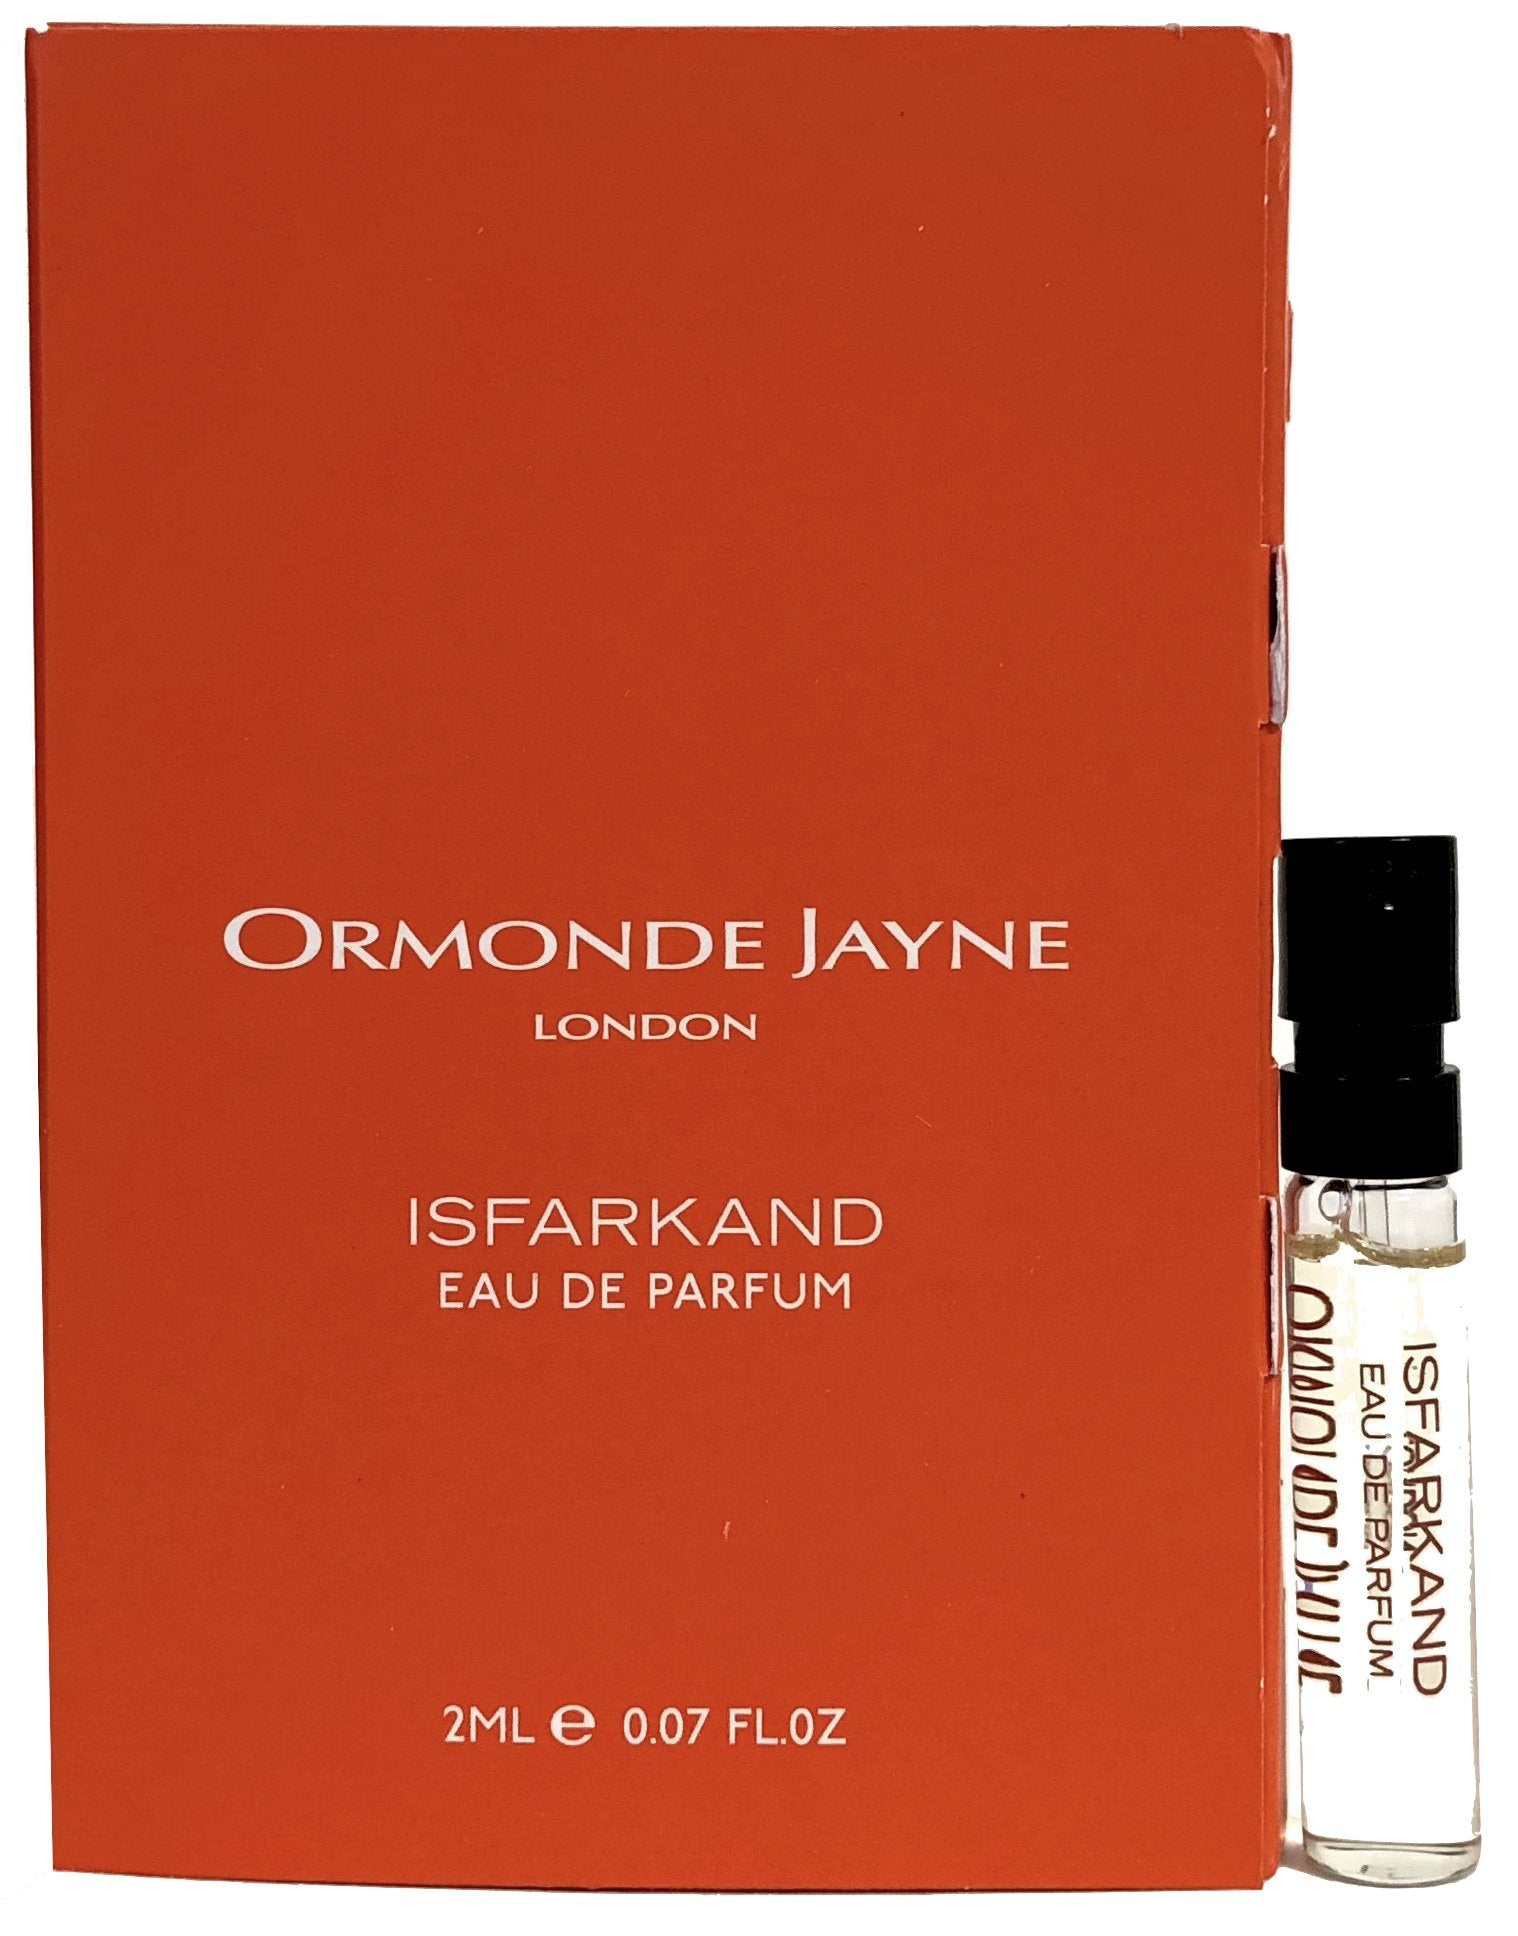 Ormonde Jayne Isfarkand 2ml oficiālie smaržu paraugi